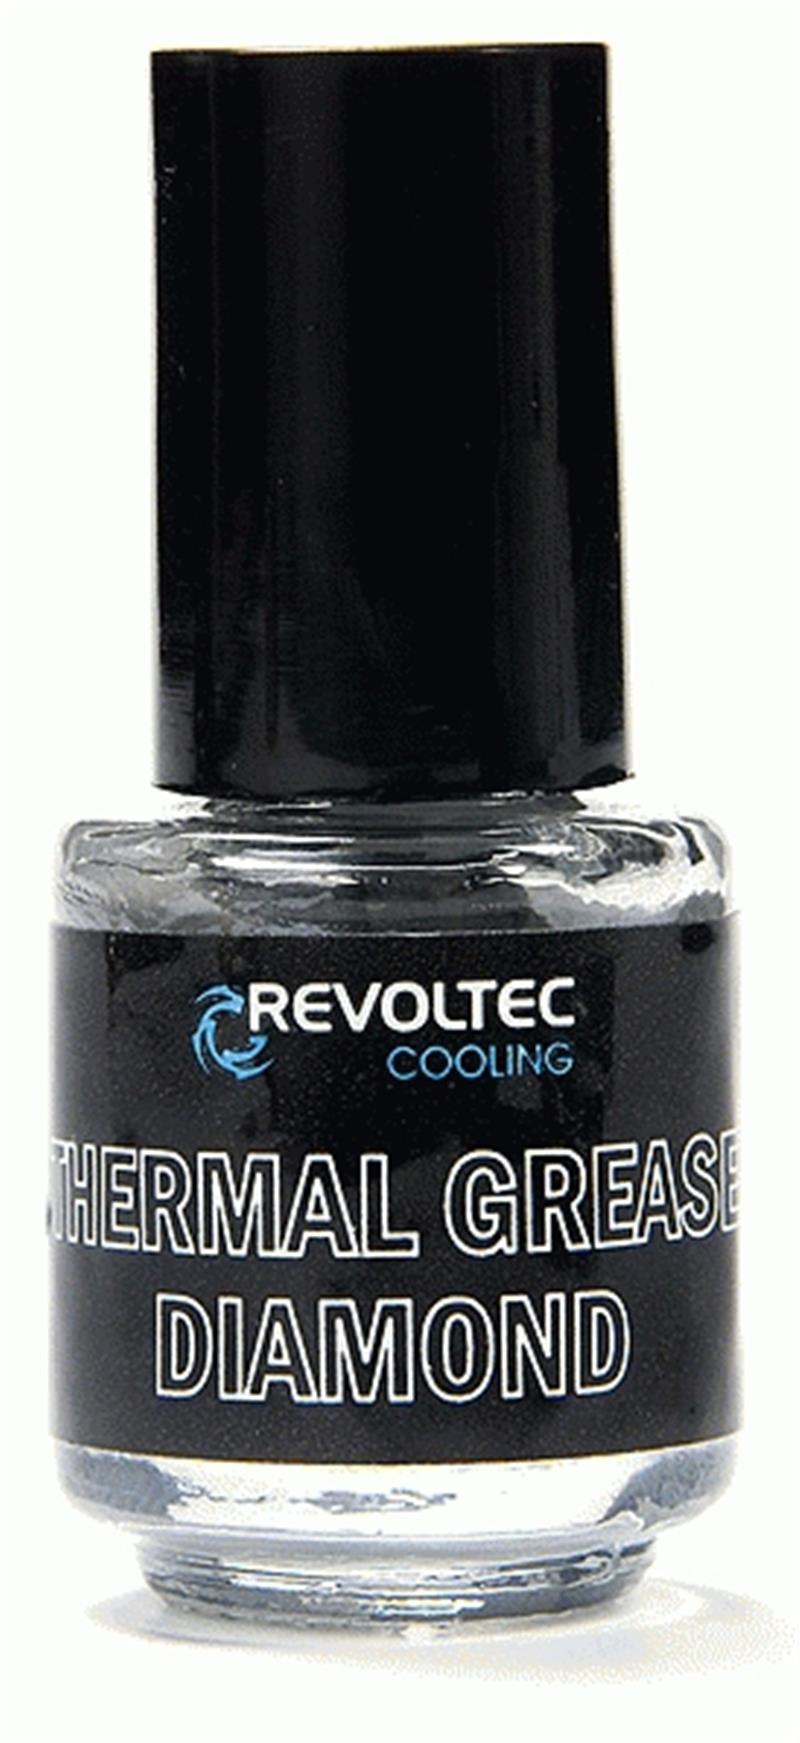 Revoltec thermal grease diamond 6 g 